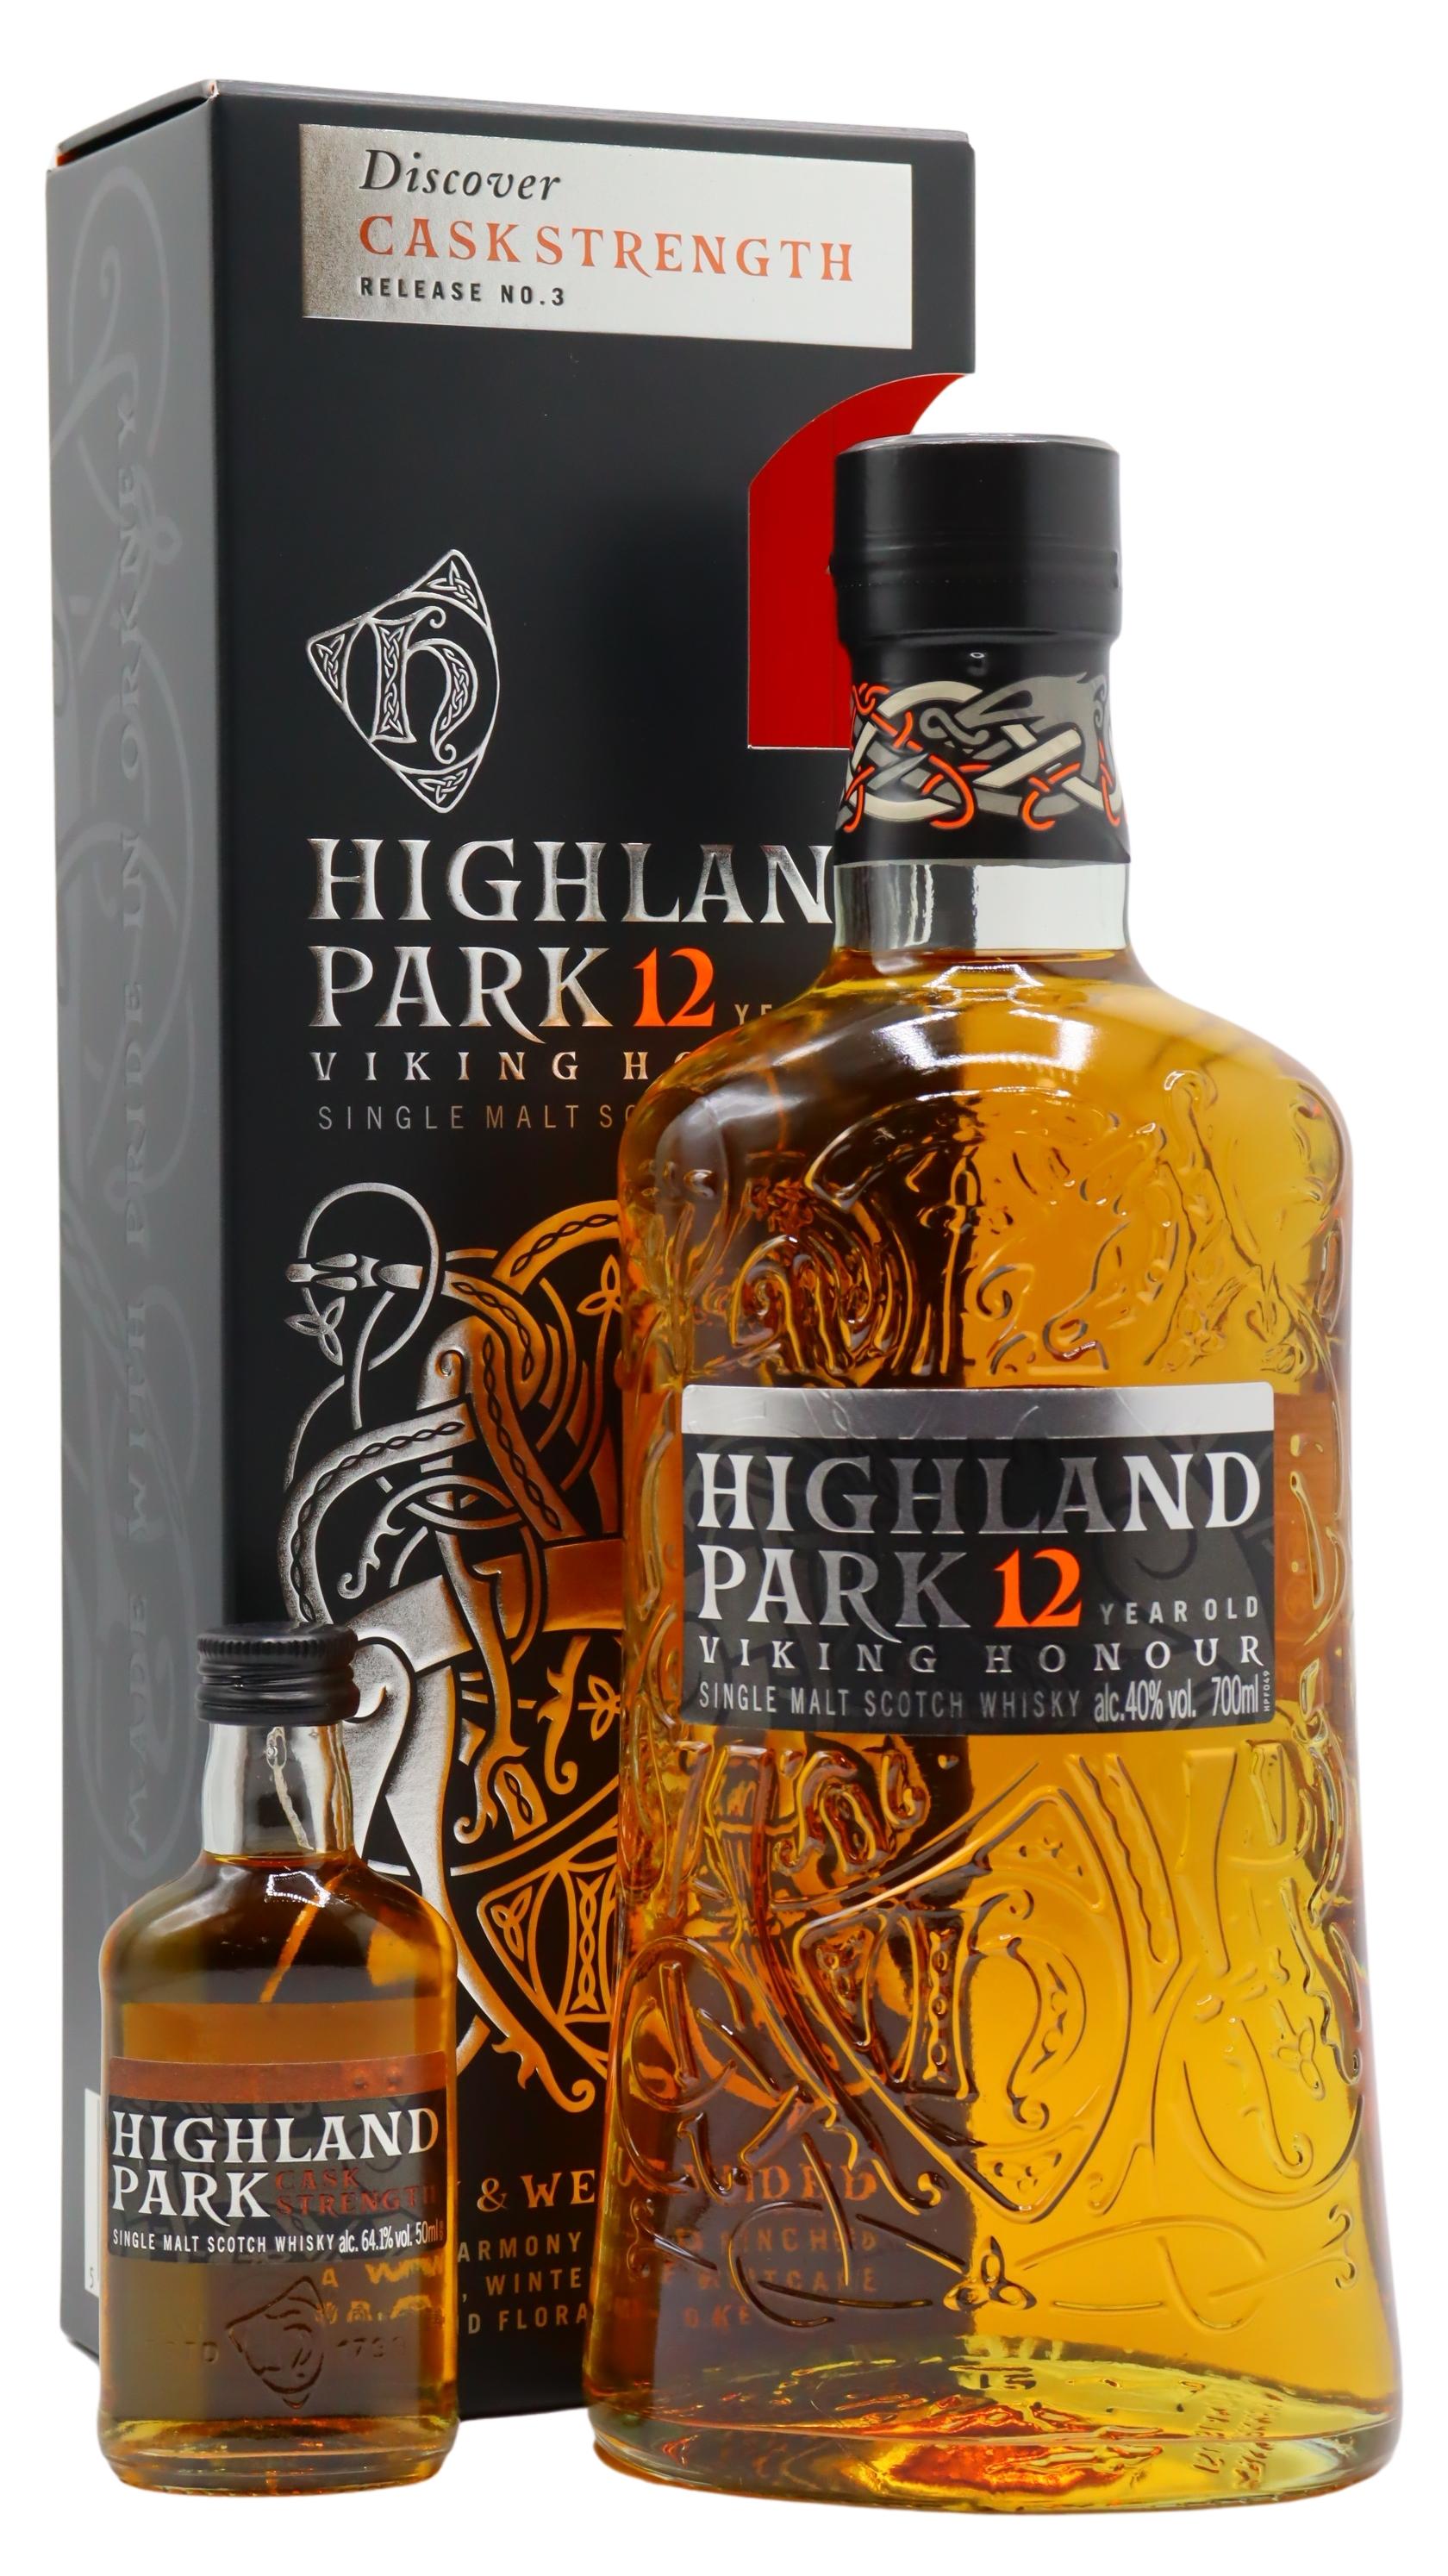 Highland Park 12YR Viking Honour Single Malt Scotch Whiskey